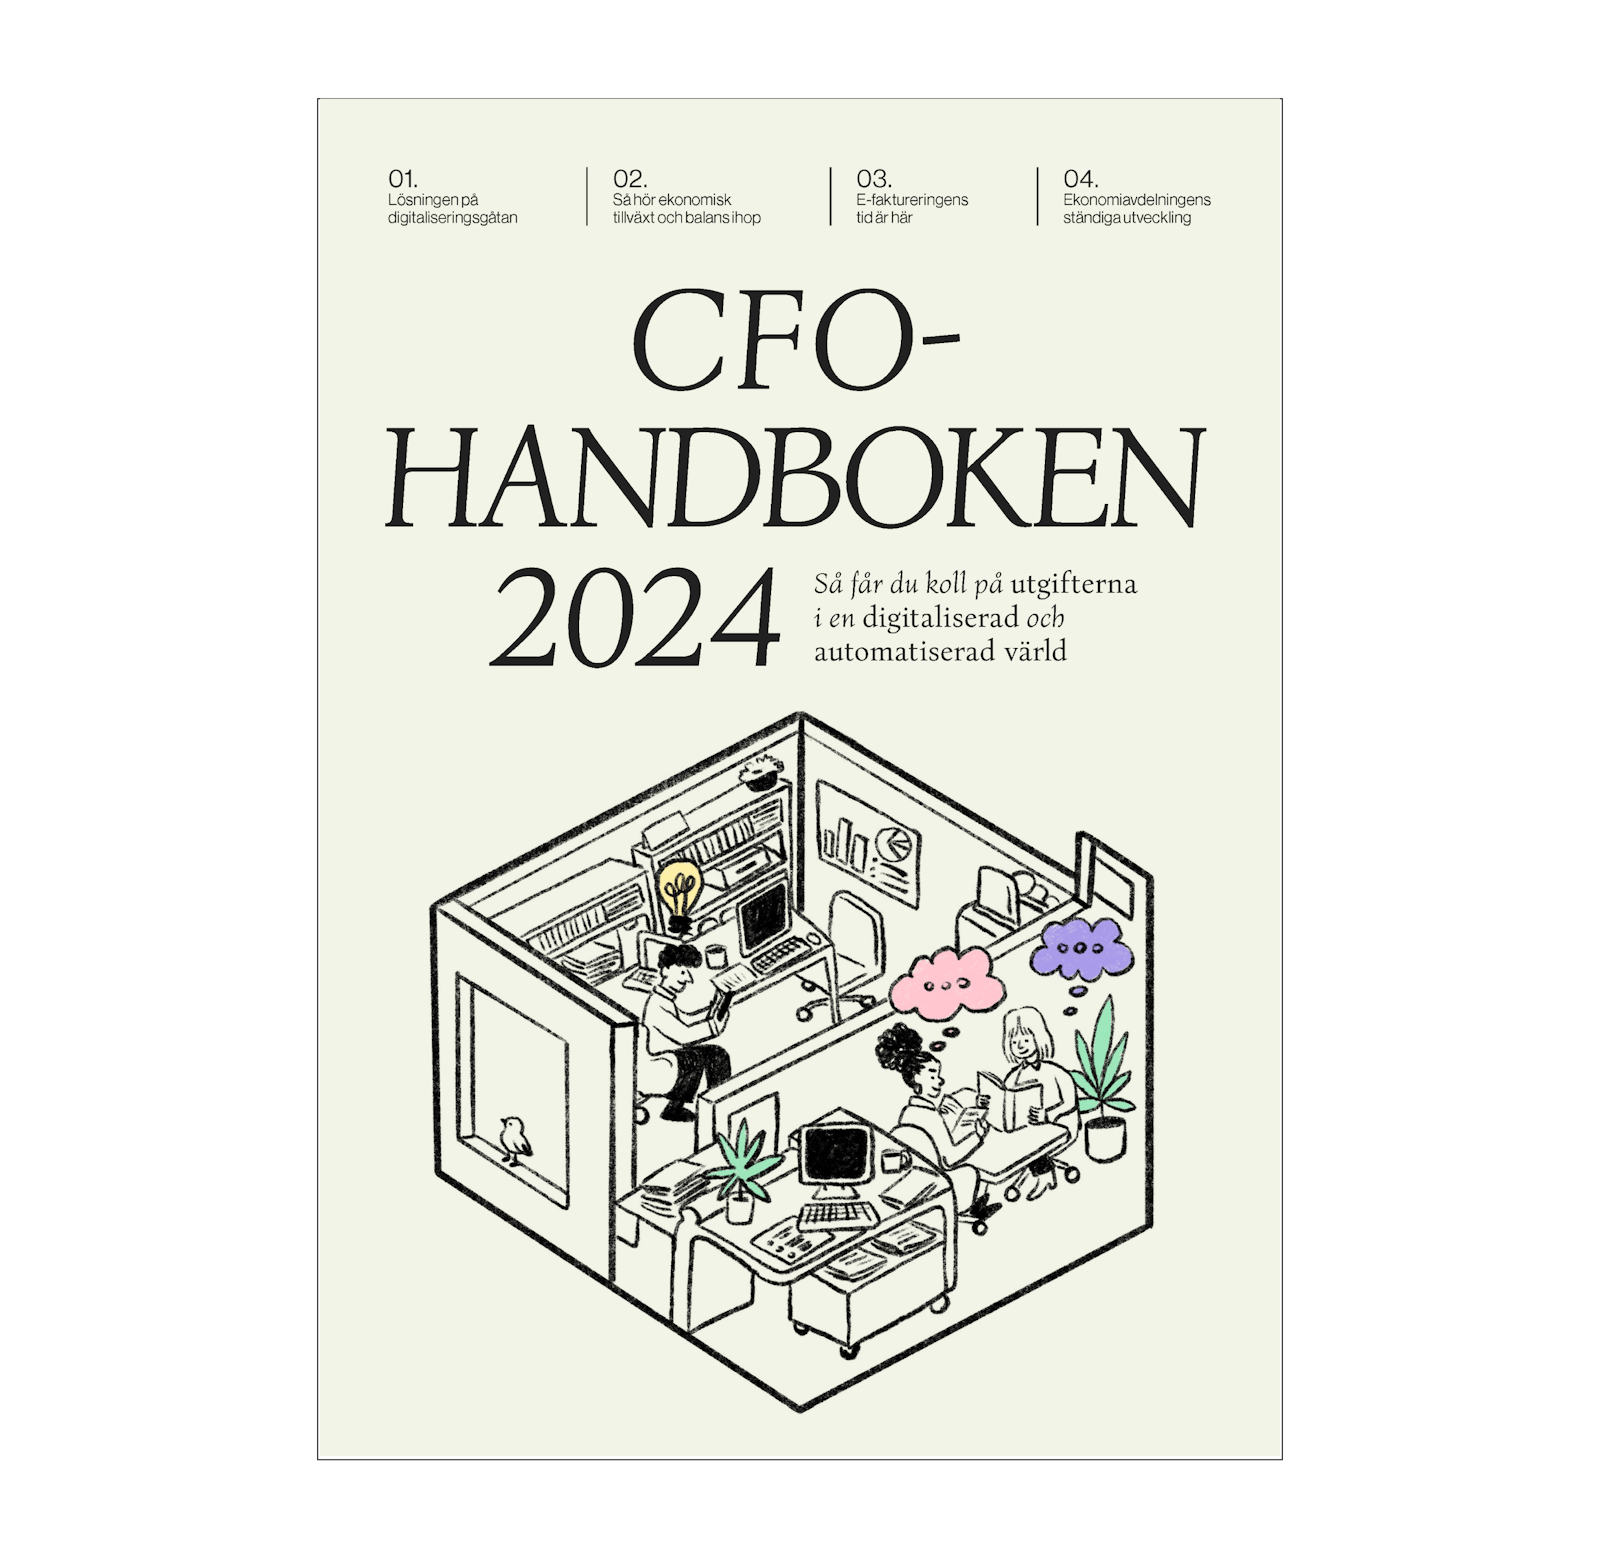 CFO-handboken 2024